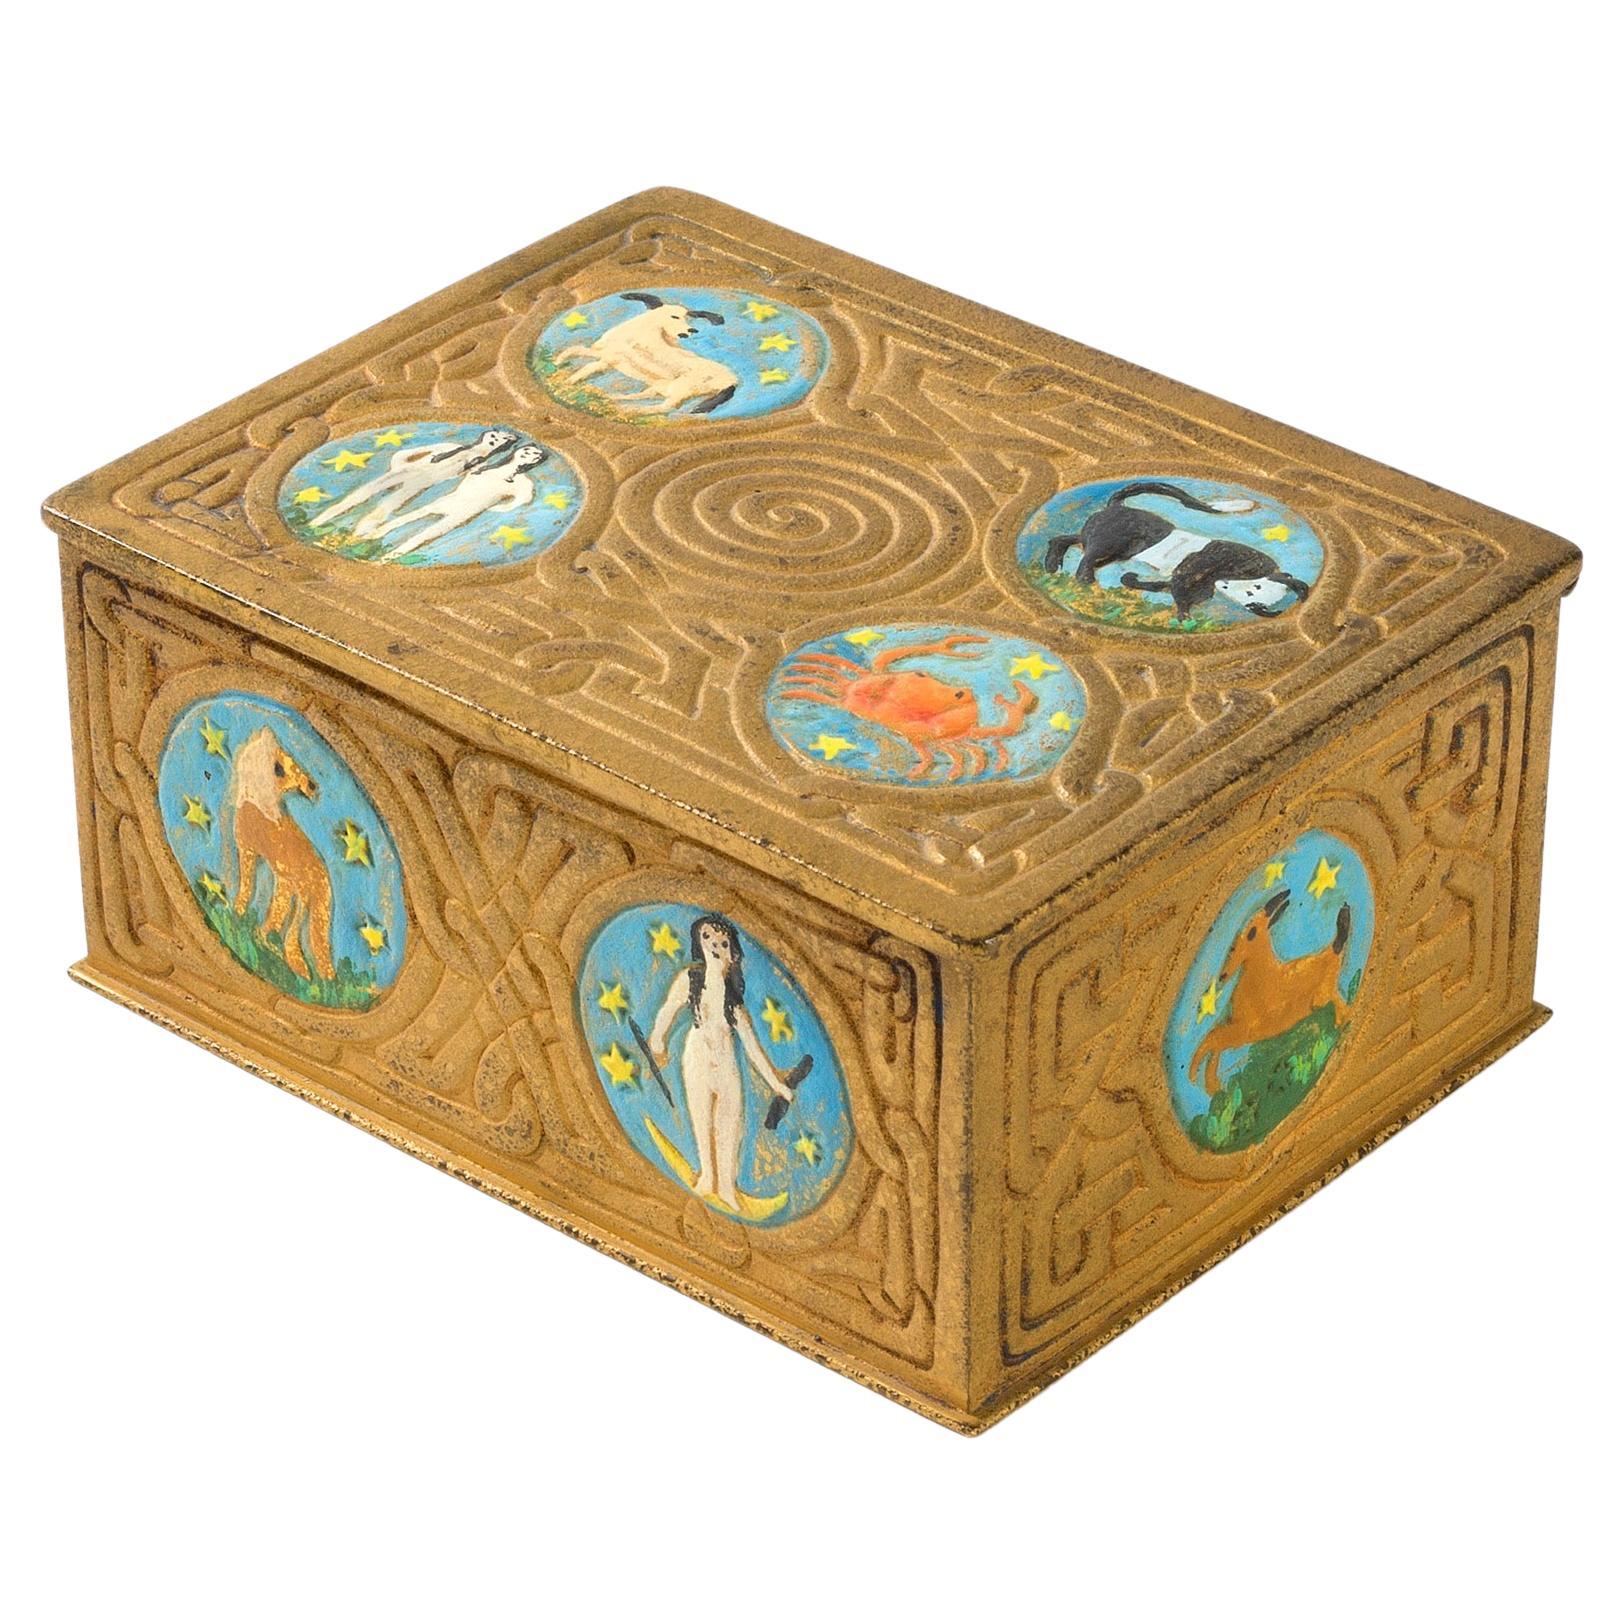 Tiffany Studios New York "Zodiac" Box